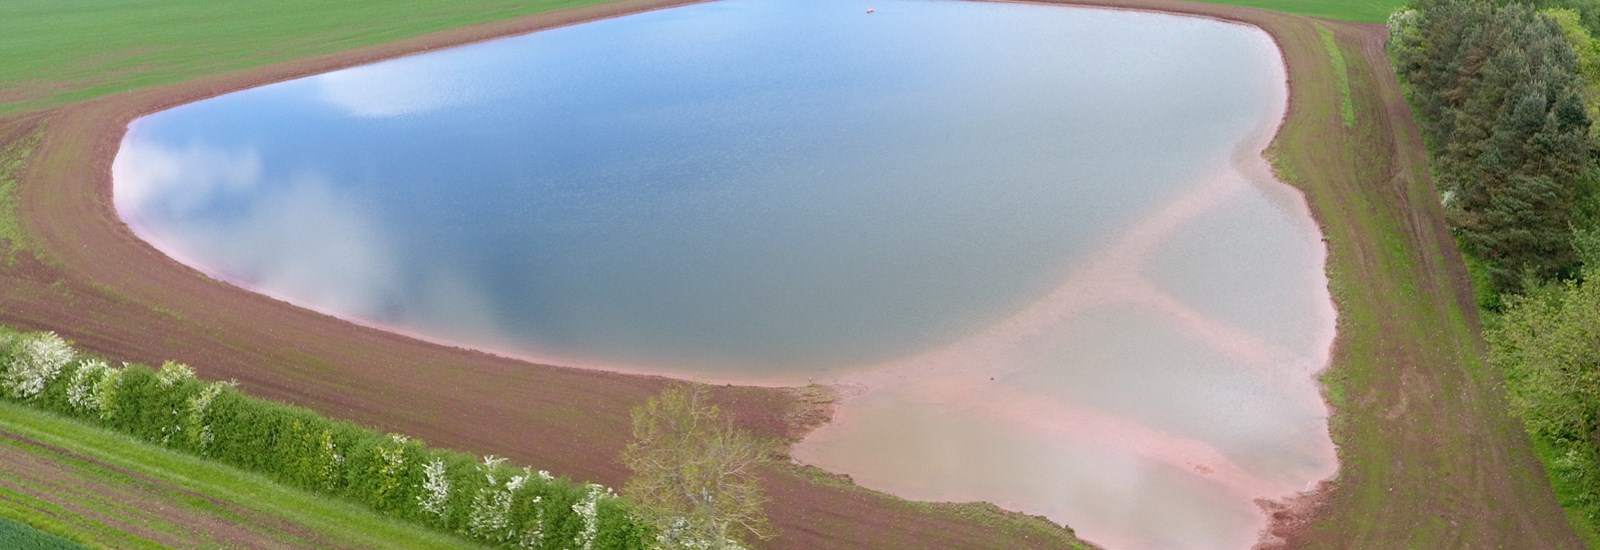 Reservoir in Staffordshire